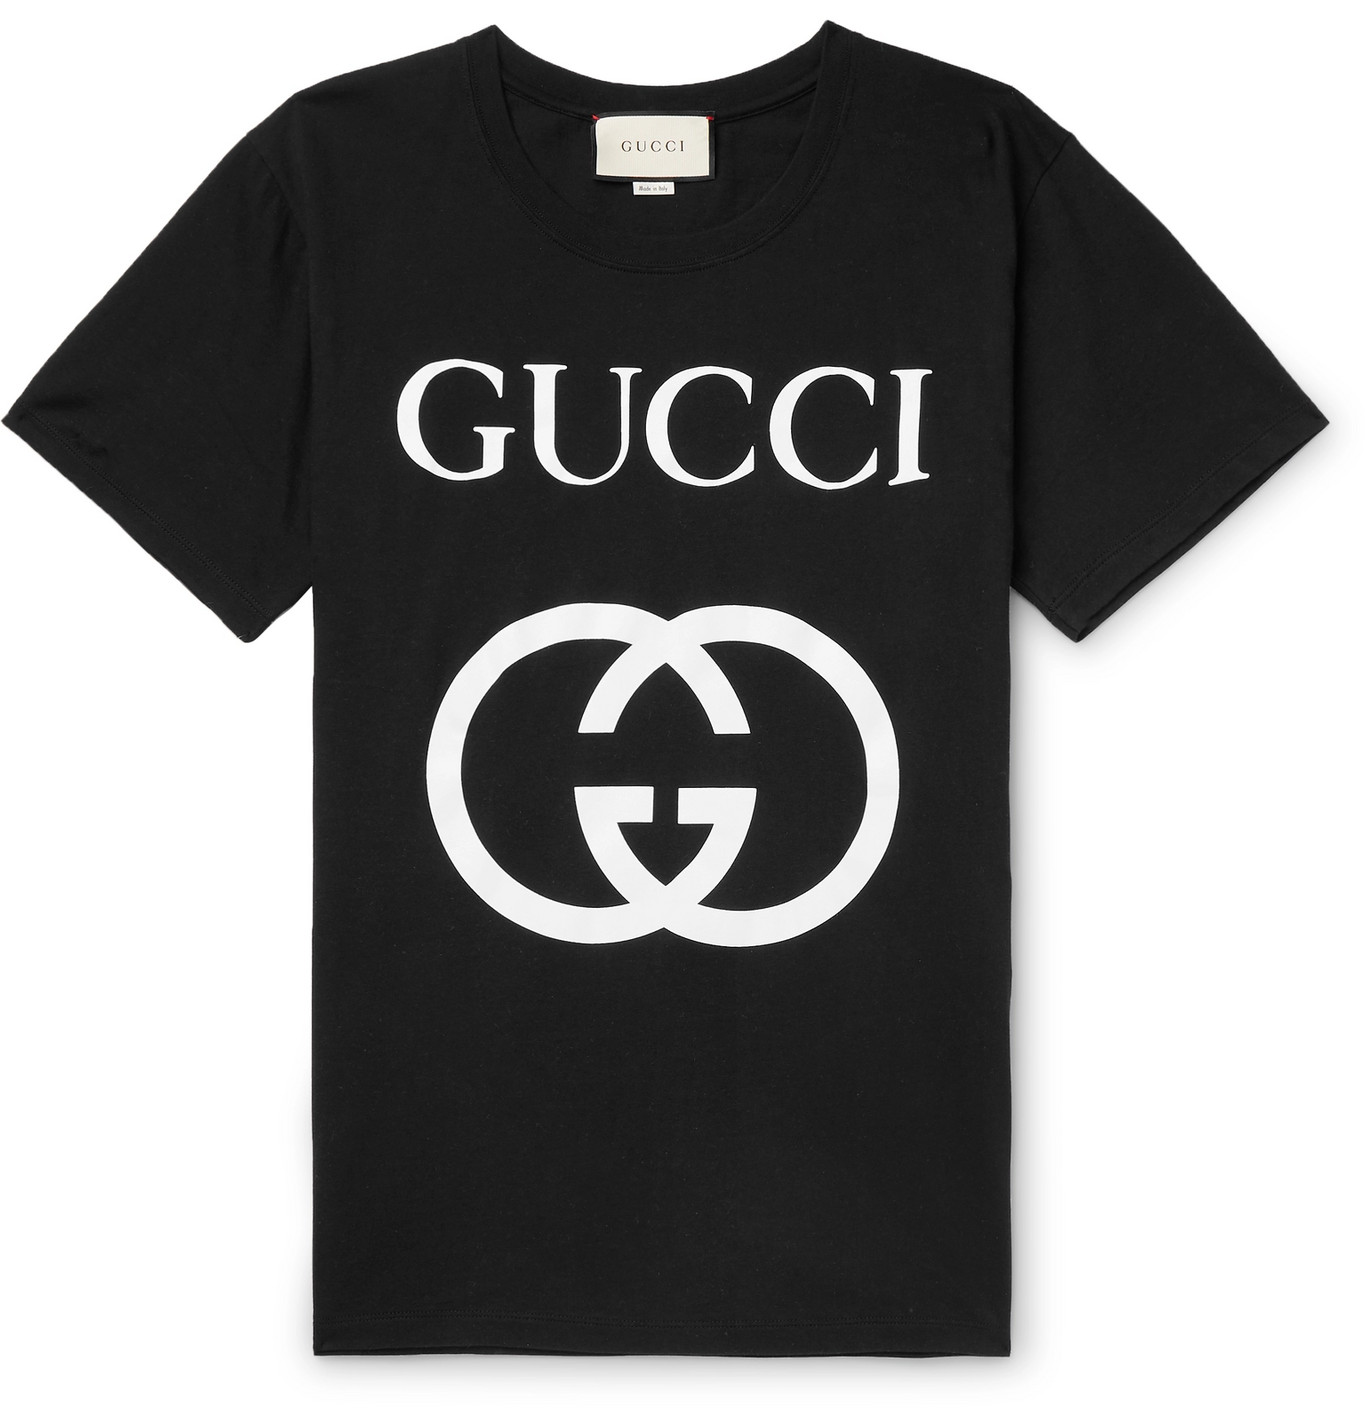 Gucci LogoPrint CottonJersey TShirt Men Black The Fashionisto